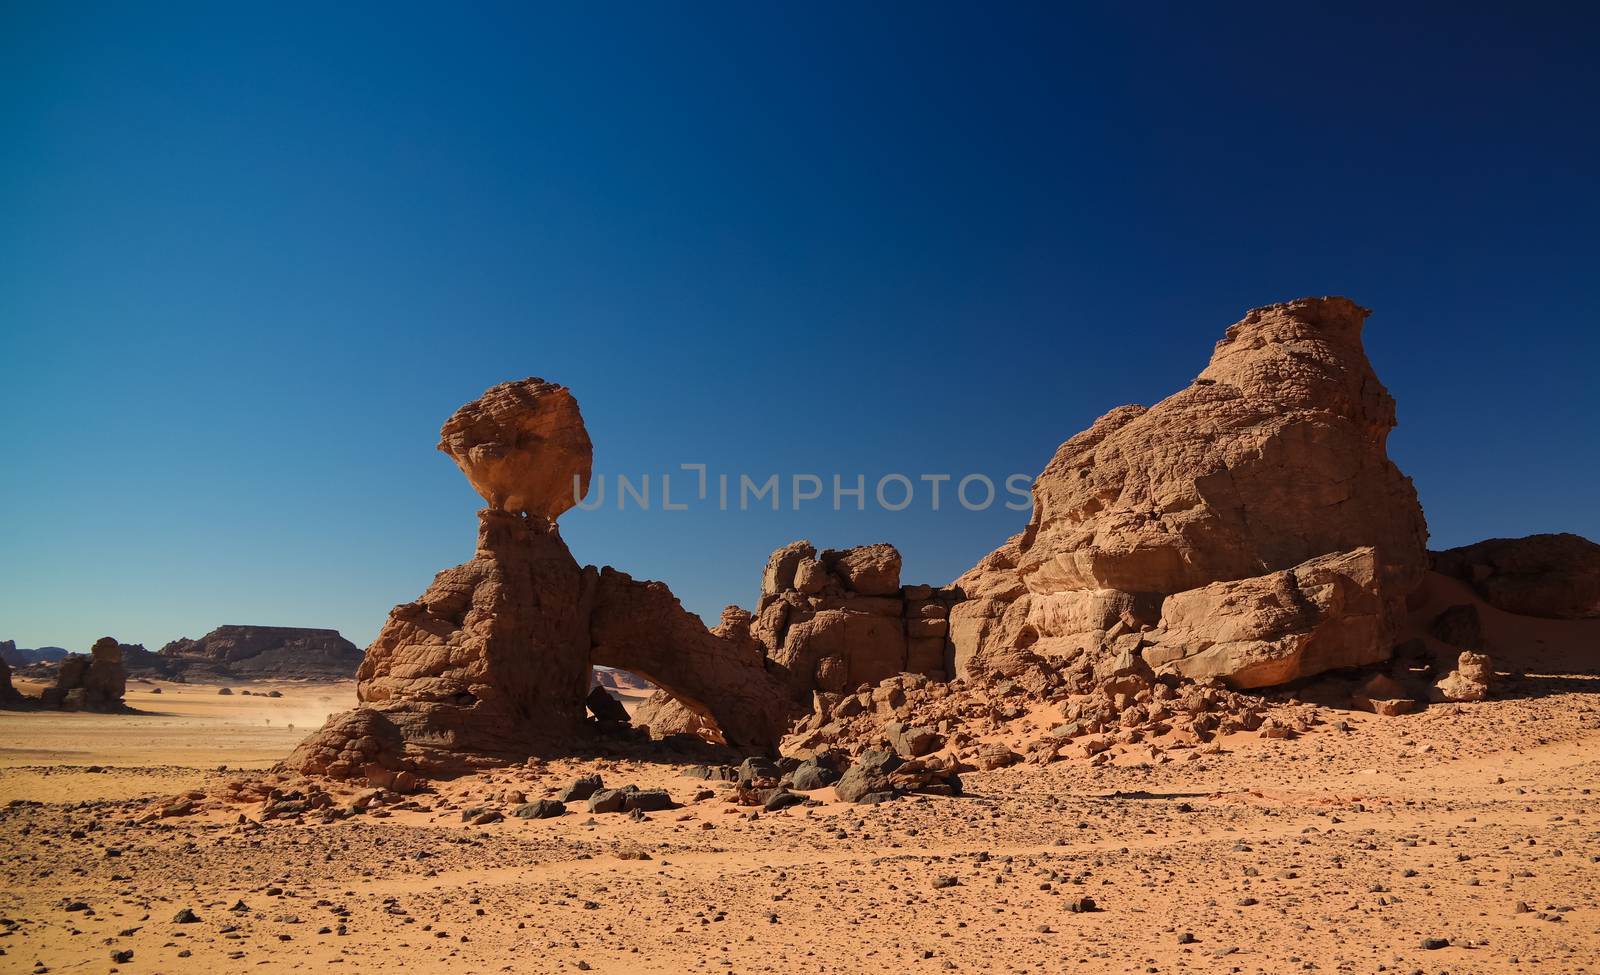 Abstract Rock formation aka pig or hedgehog at Tamezguida, Tassili nAjjer national park, Algeria by homocosmicos